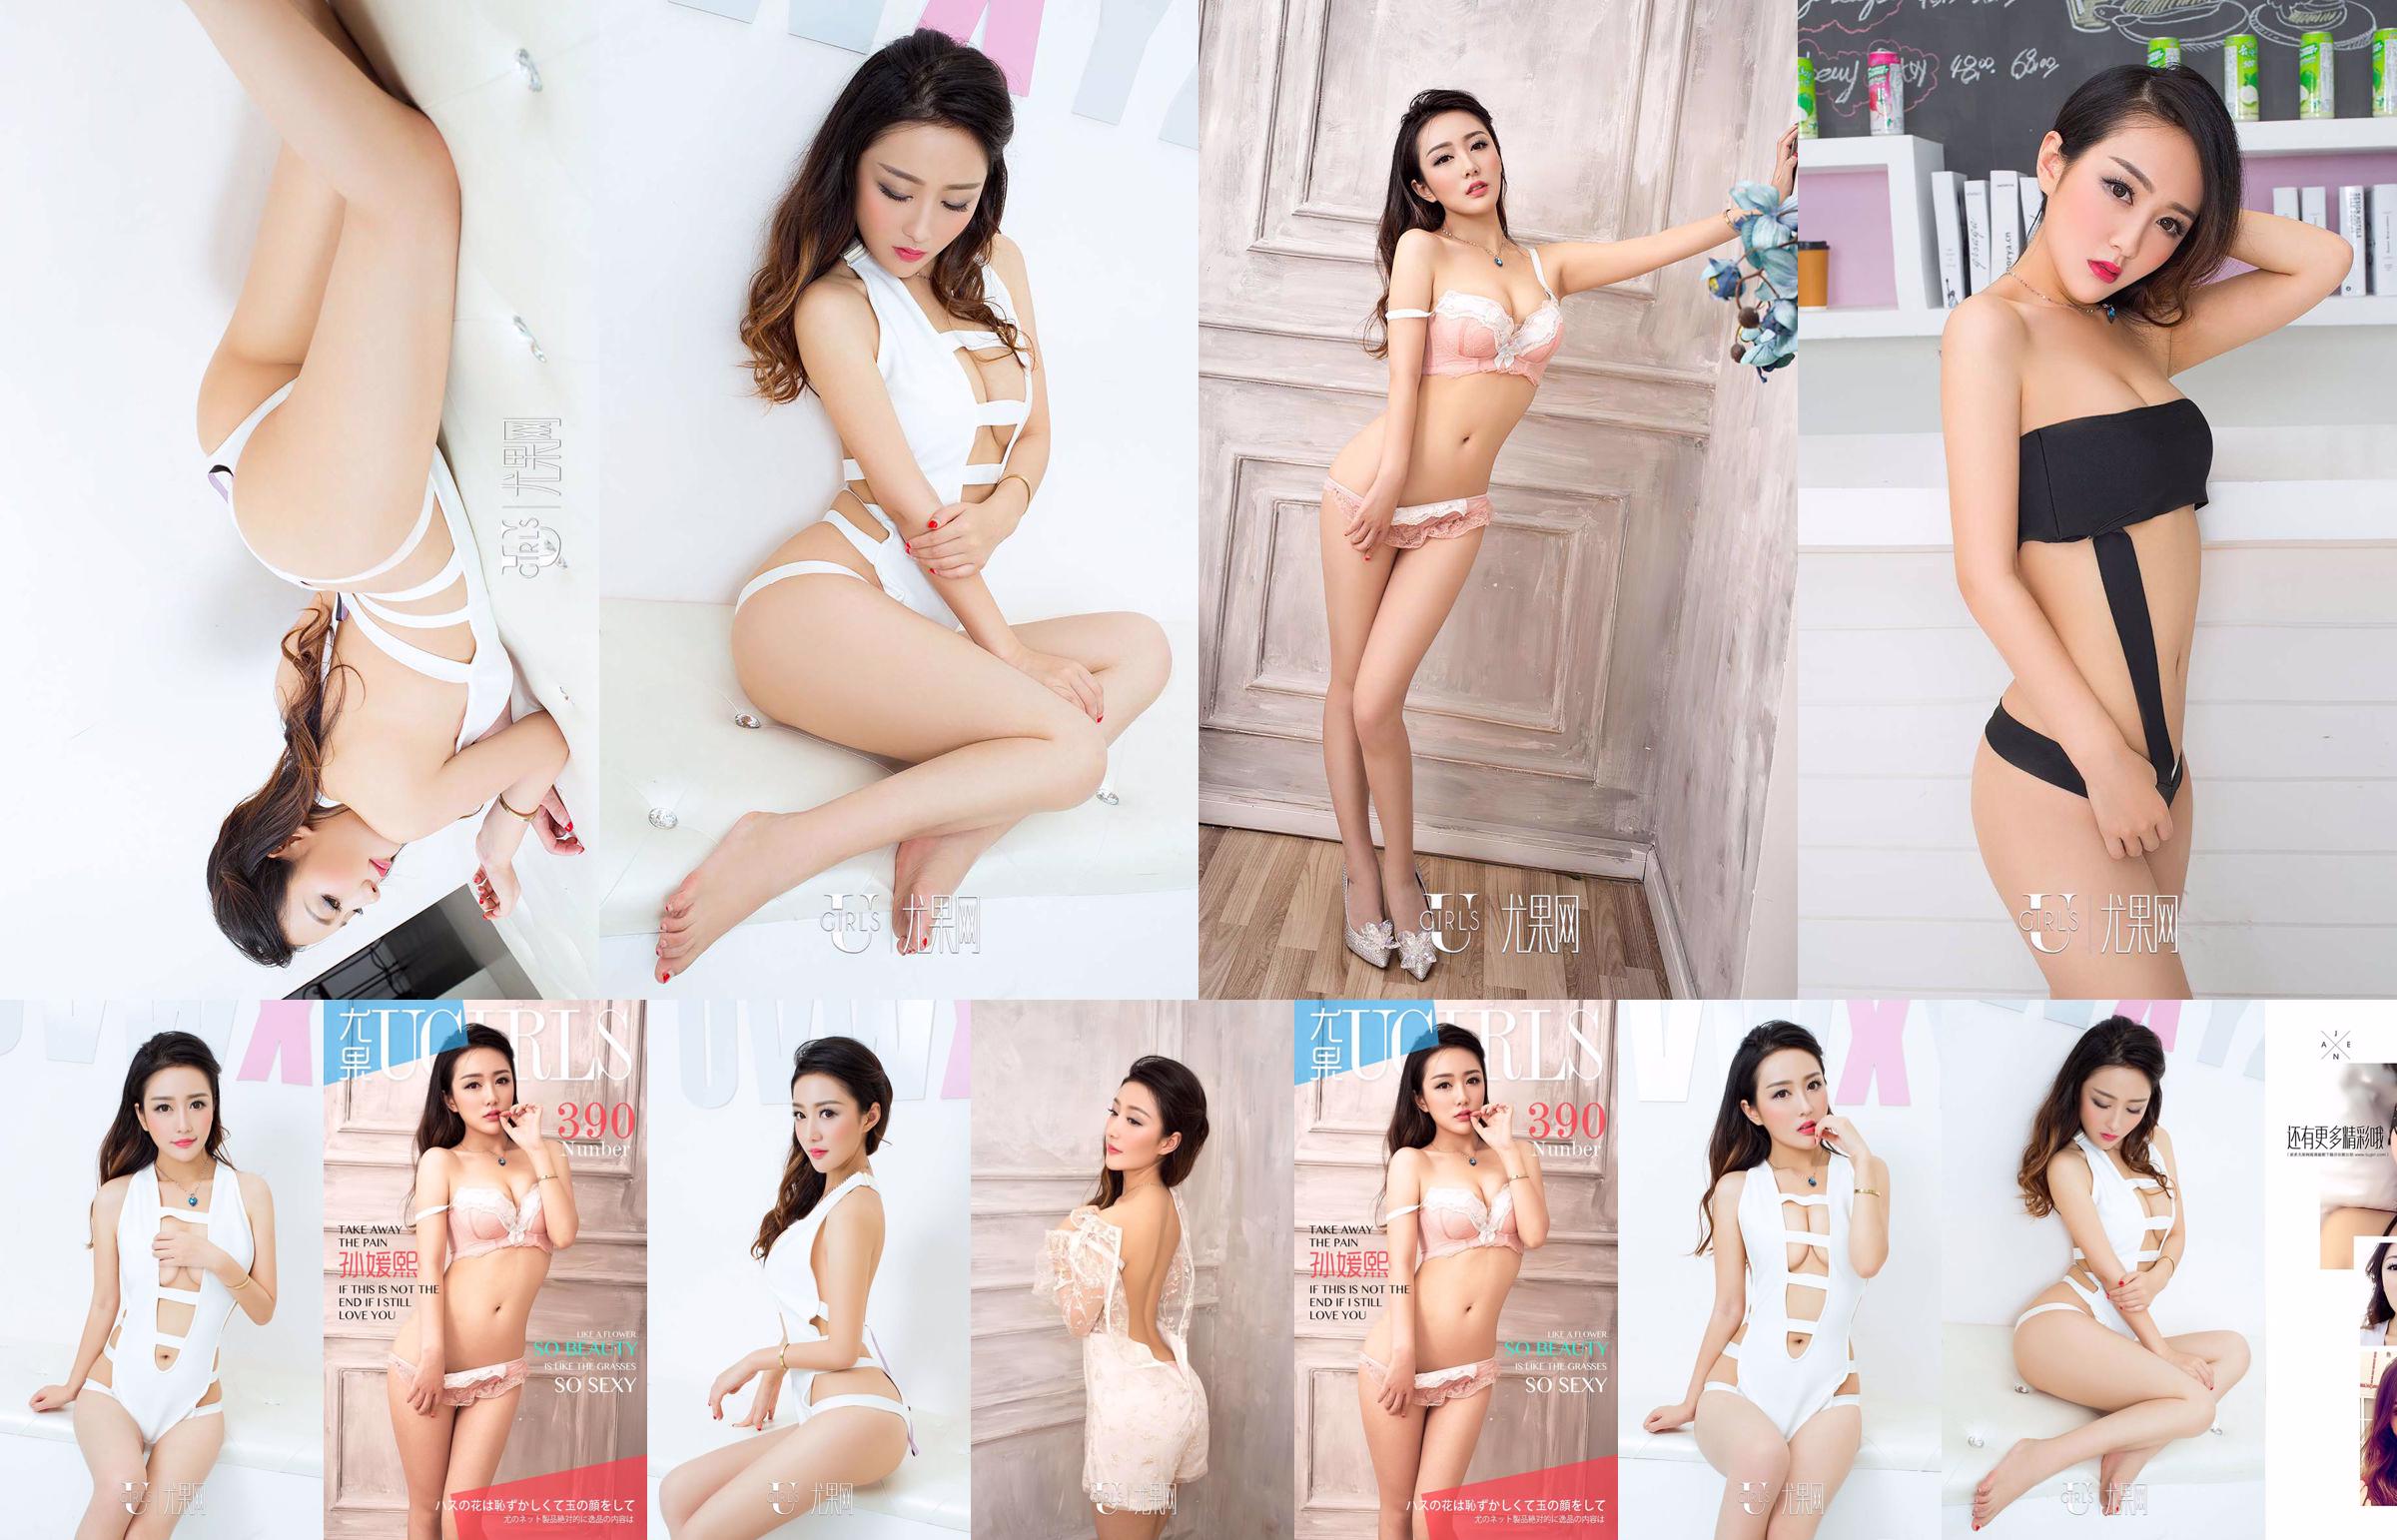 Sun Yuanxi "tão bela tão sexy" [爱 优 物 Ugirls] No.390 No.b8bdbd Página 1